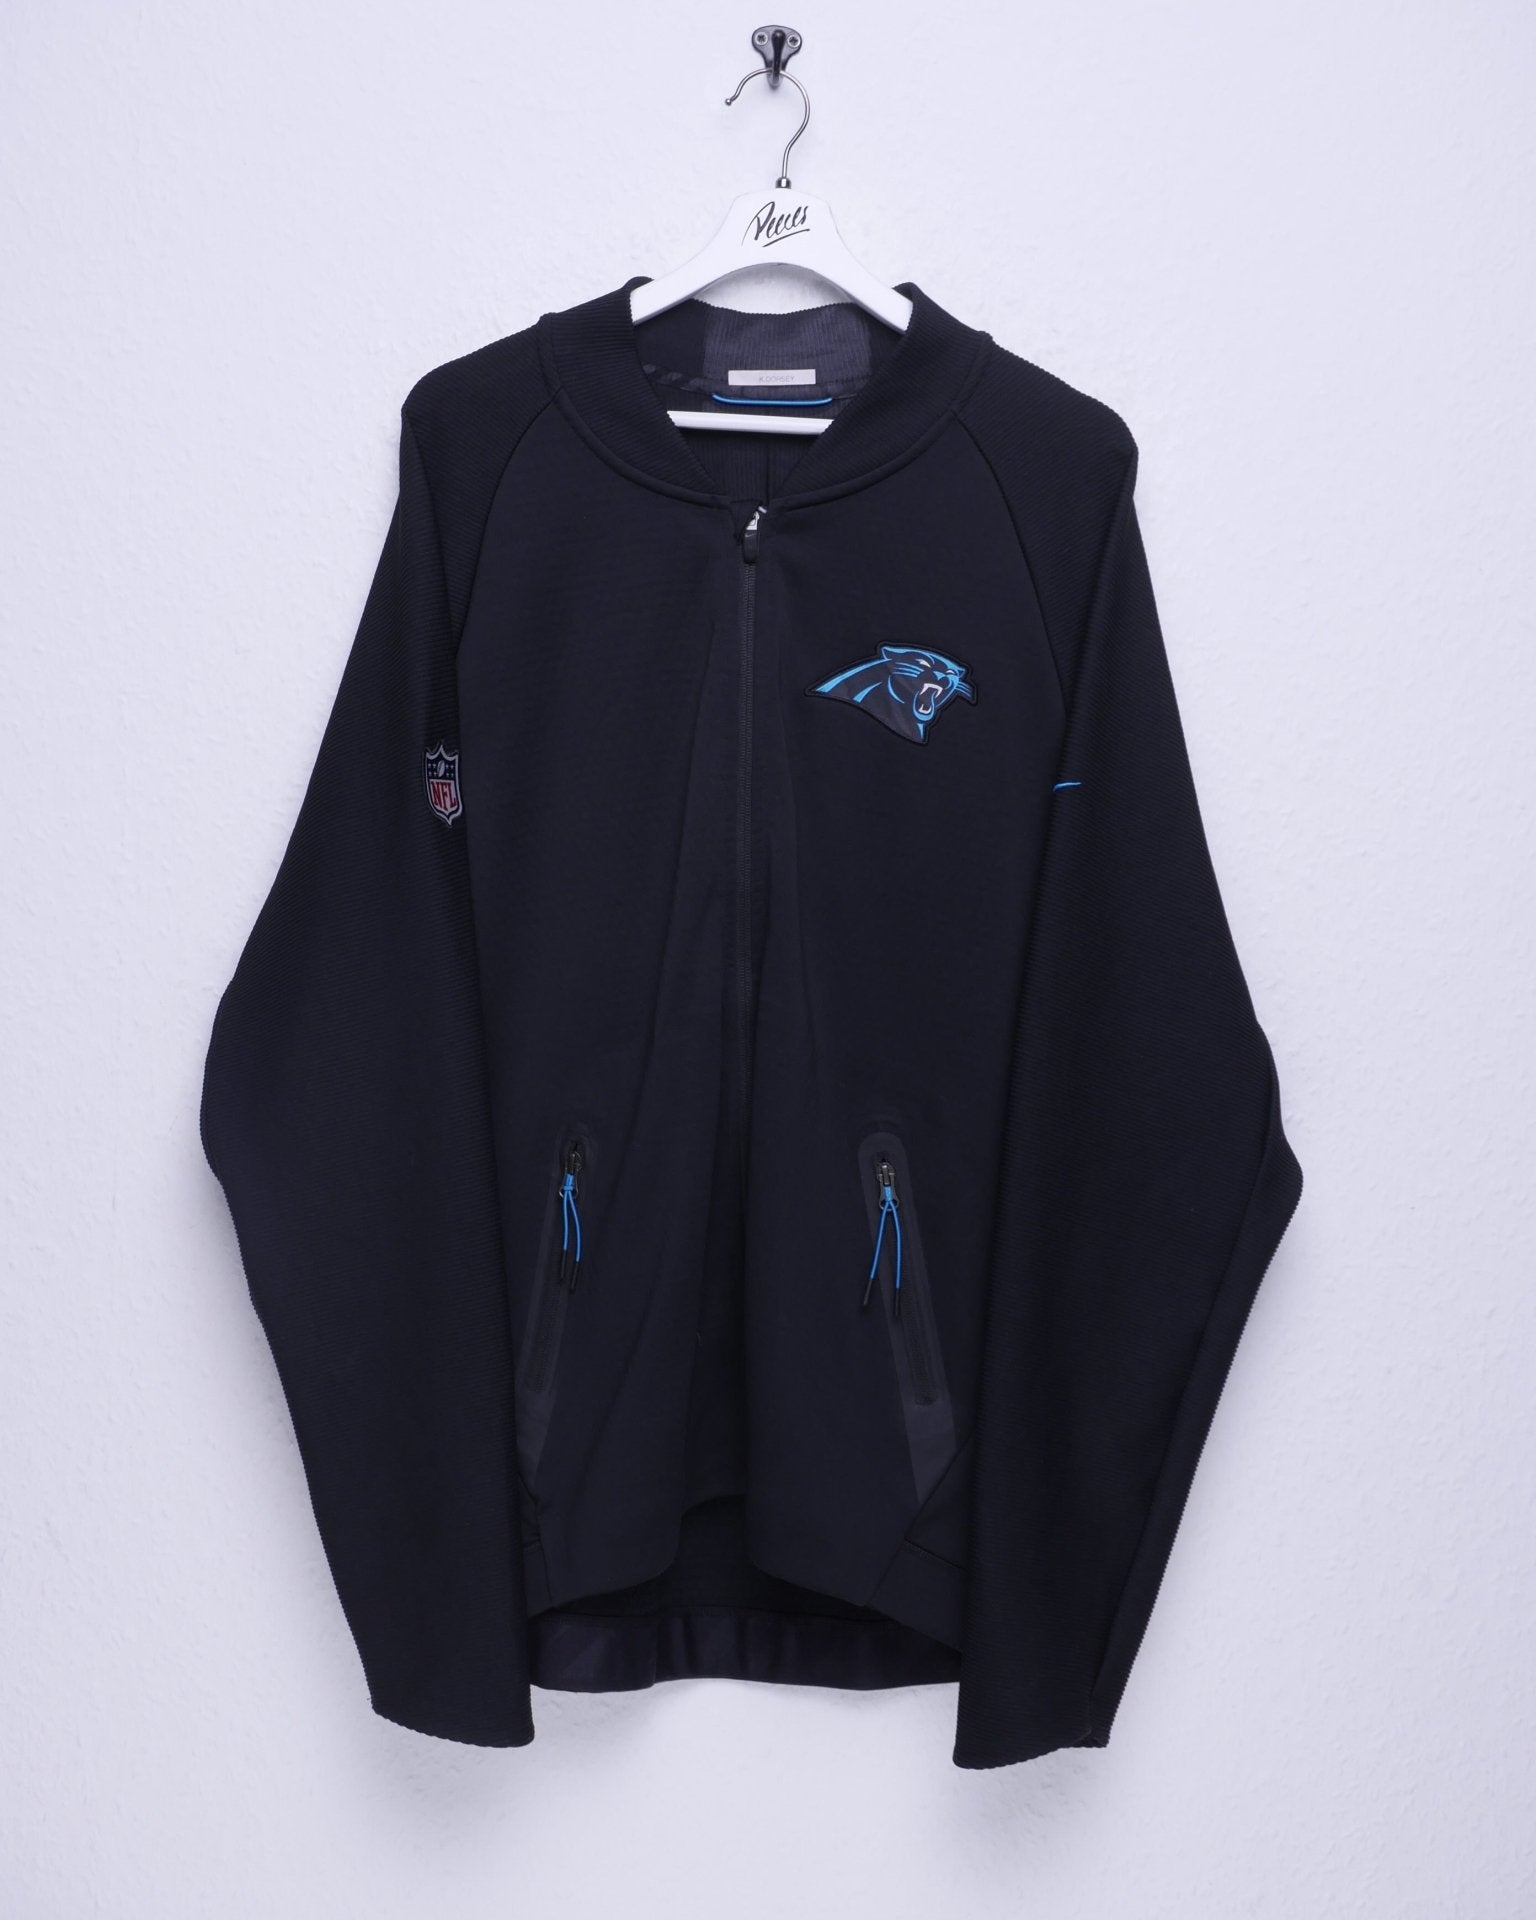 Nike embroidered Logo NFL Jaguars Full Zip Sweater - Peeces